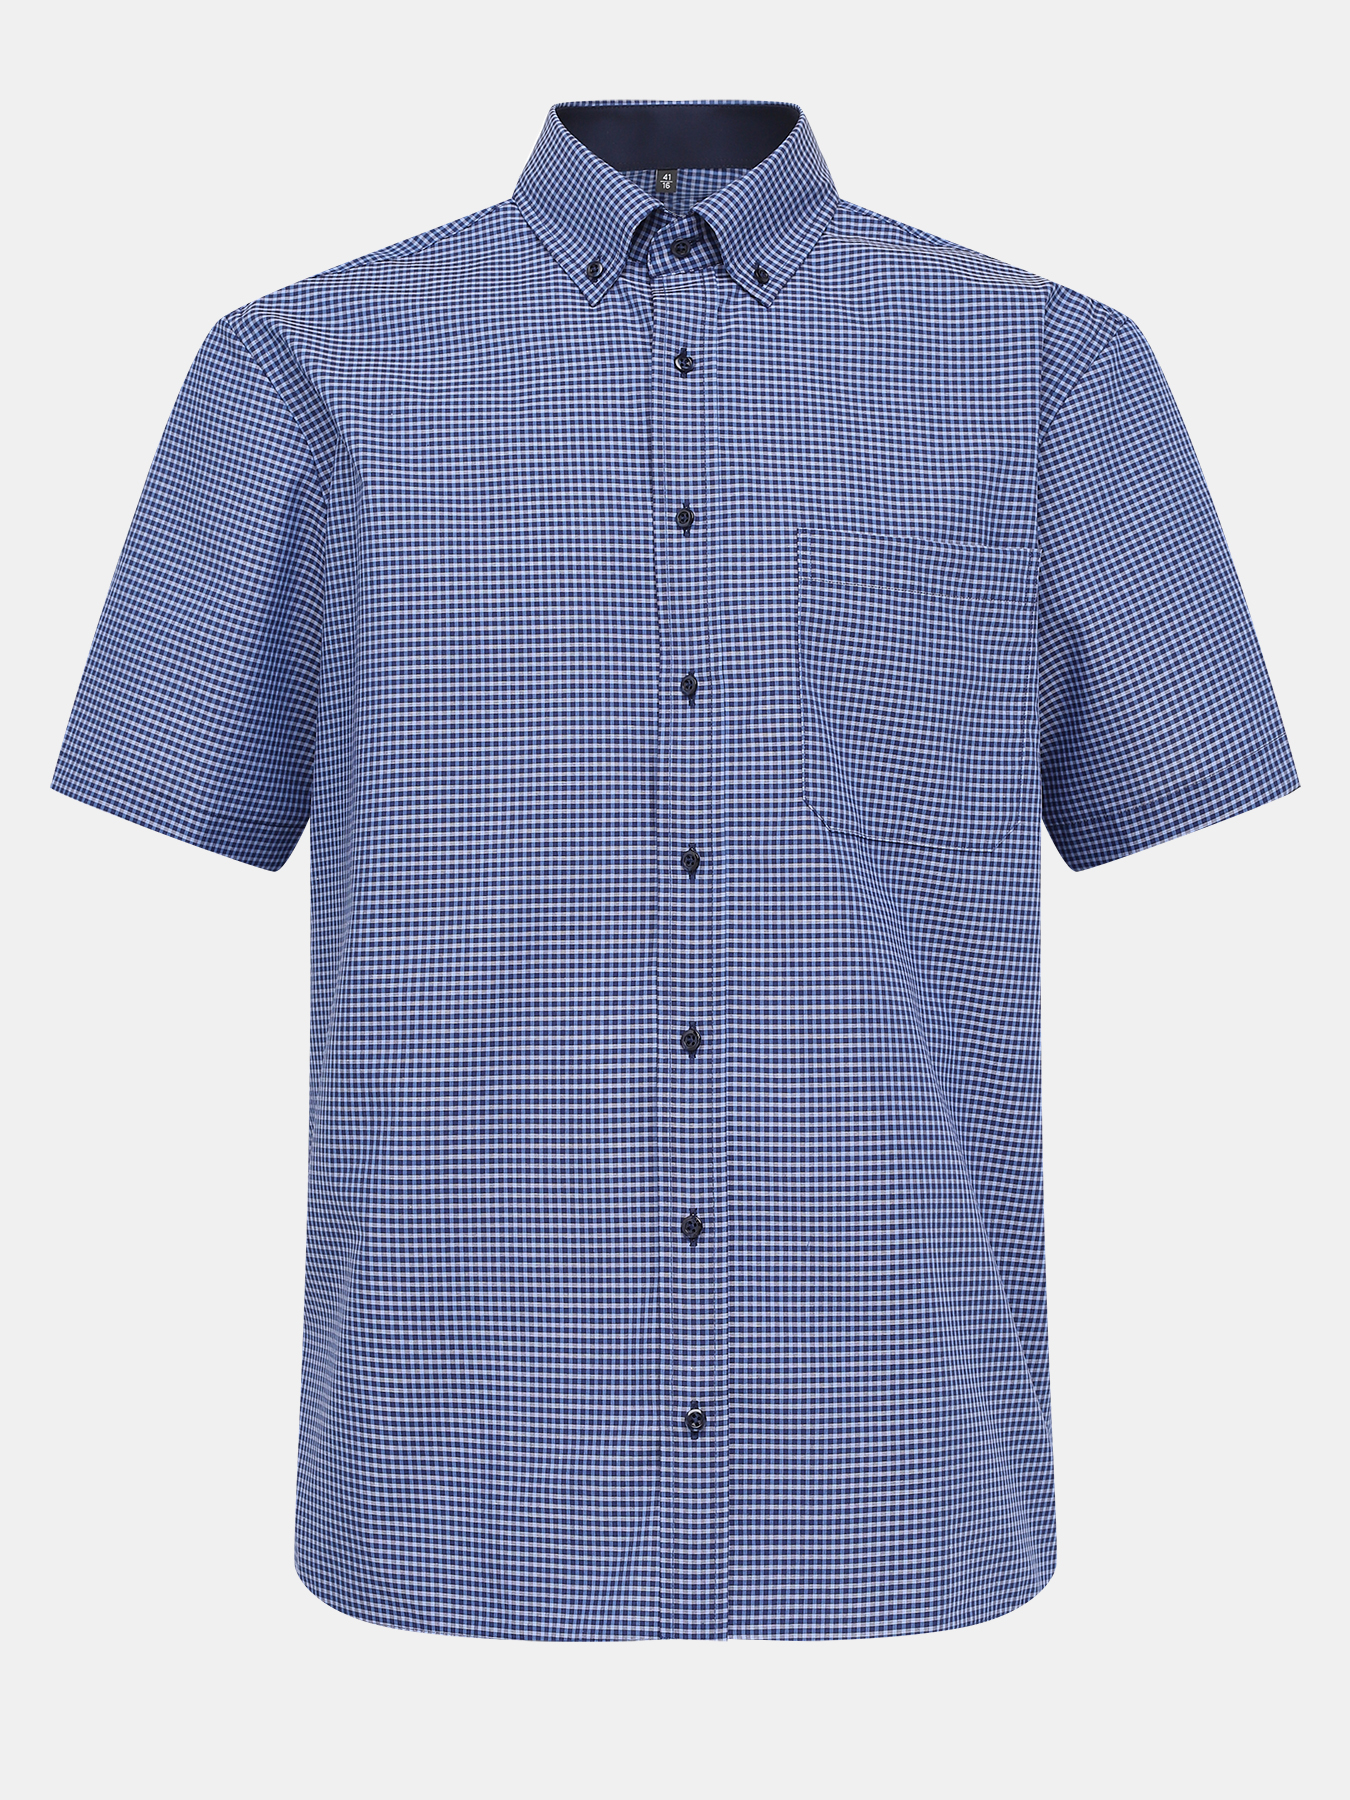 Рубашка Eterna 416186-052, цвет темно-синий, размер 60 - фото 1